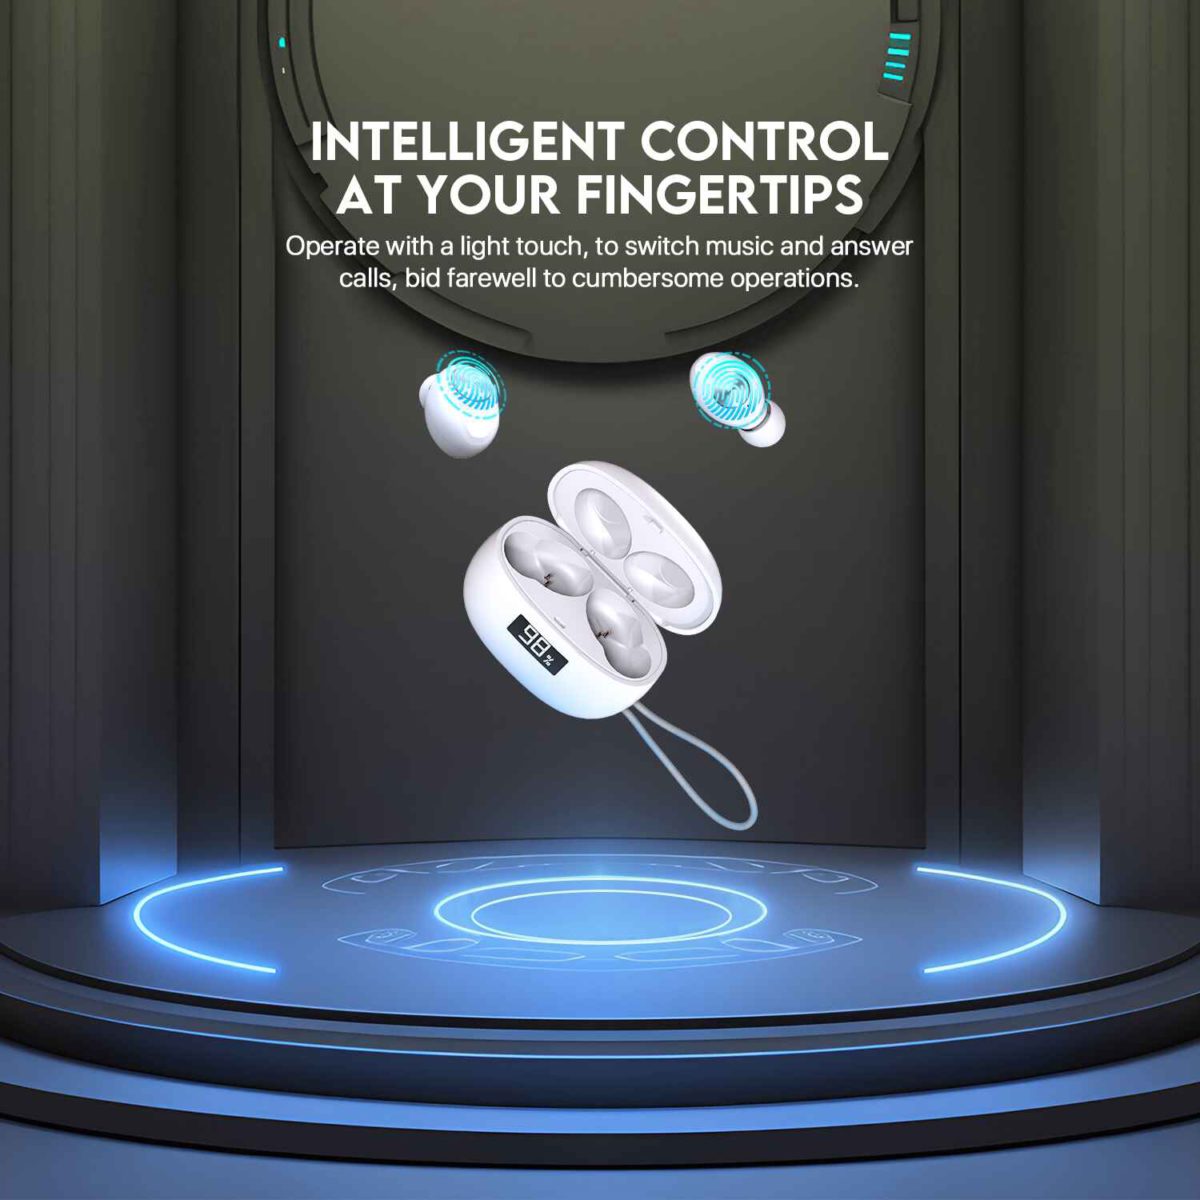 Intellignet Control